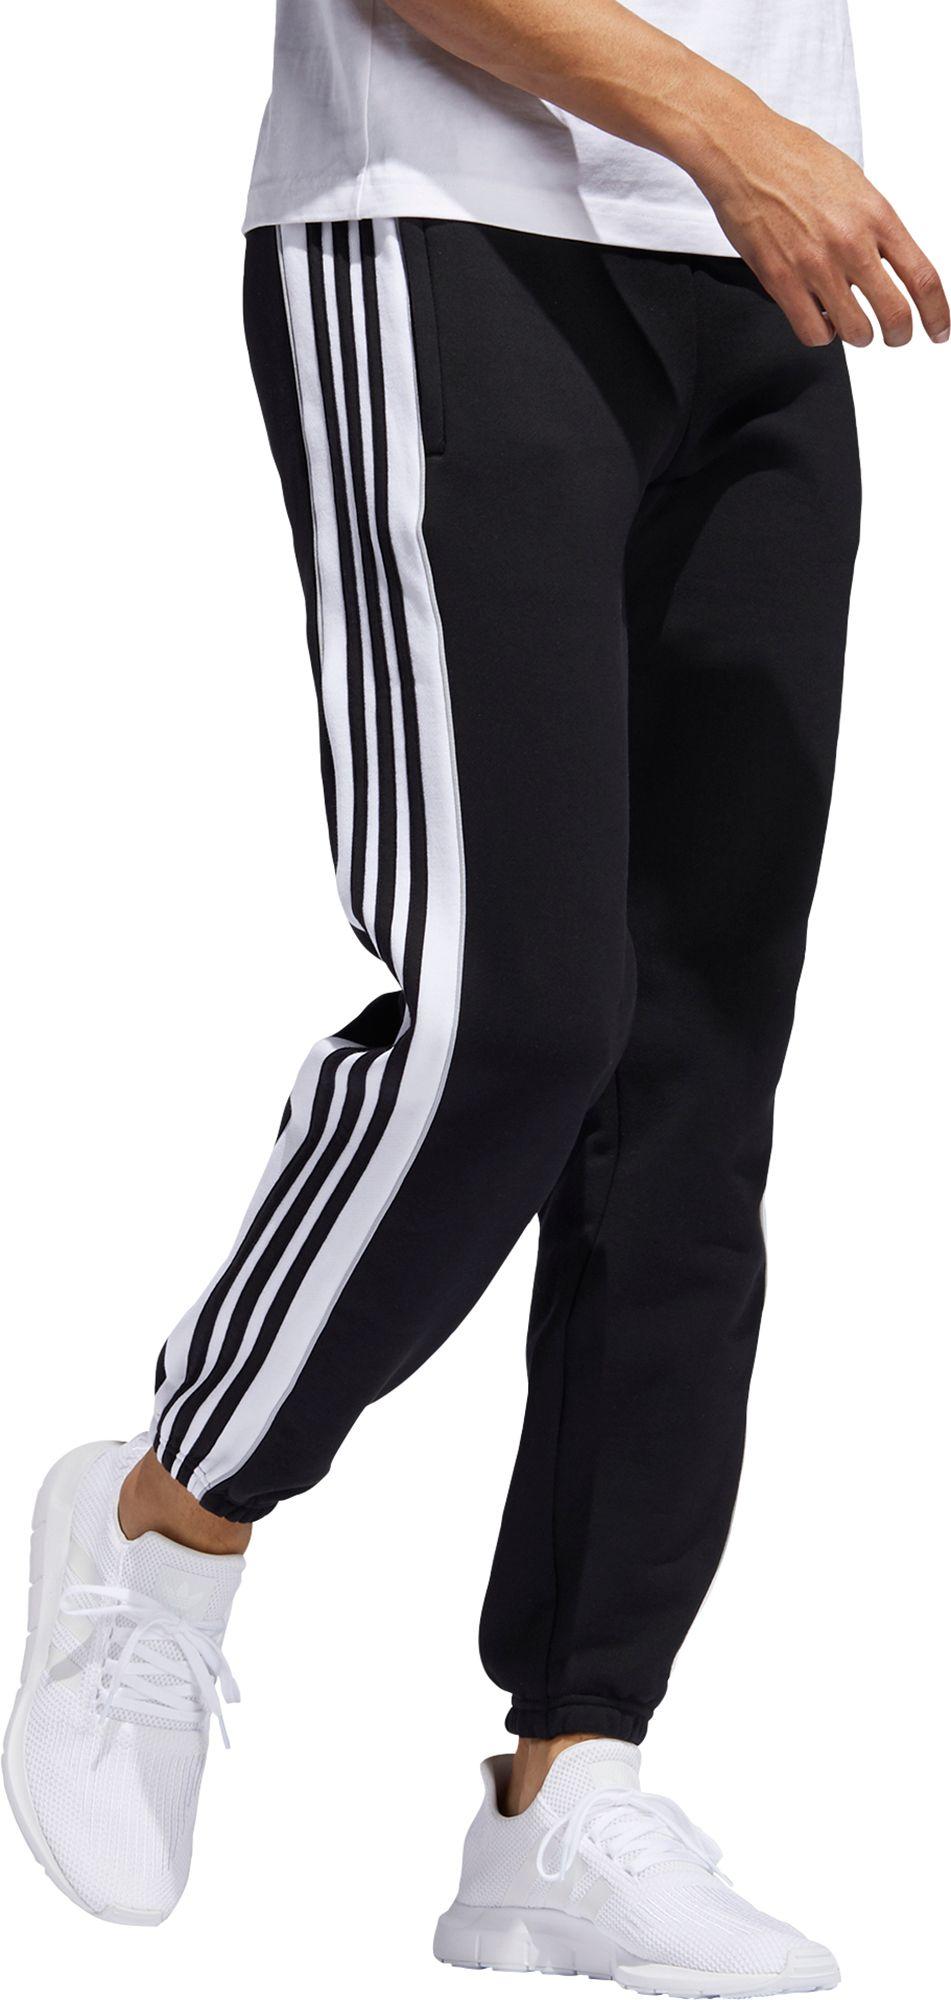 adidas Cotton Originals 3-stripes Panel Sweatpants in Black/White (Black)  for Men - Lyst